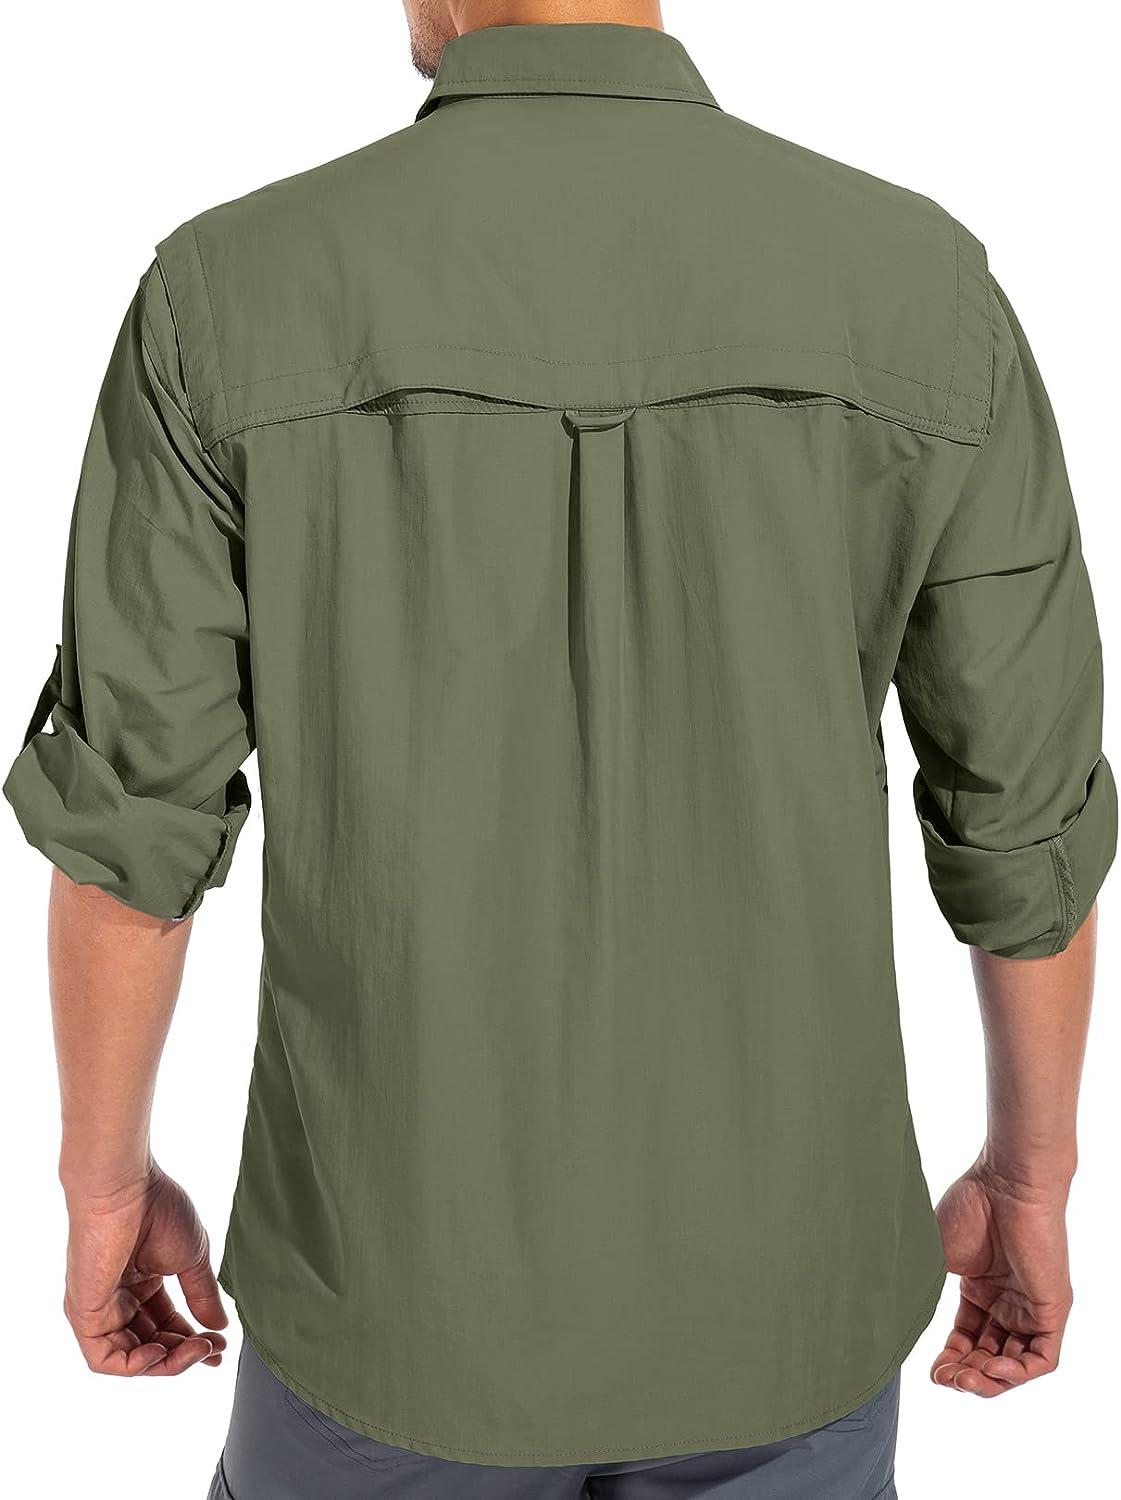 linlon Mens Safari Shirts Long Sleeve UV Protection Hiking Fishing UPF 50+  Quick Dry Cooling Camping Travel Shirts X-Large Army Green